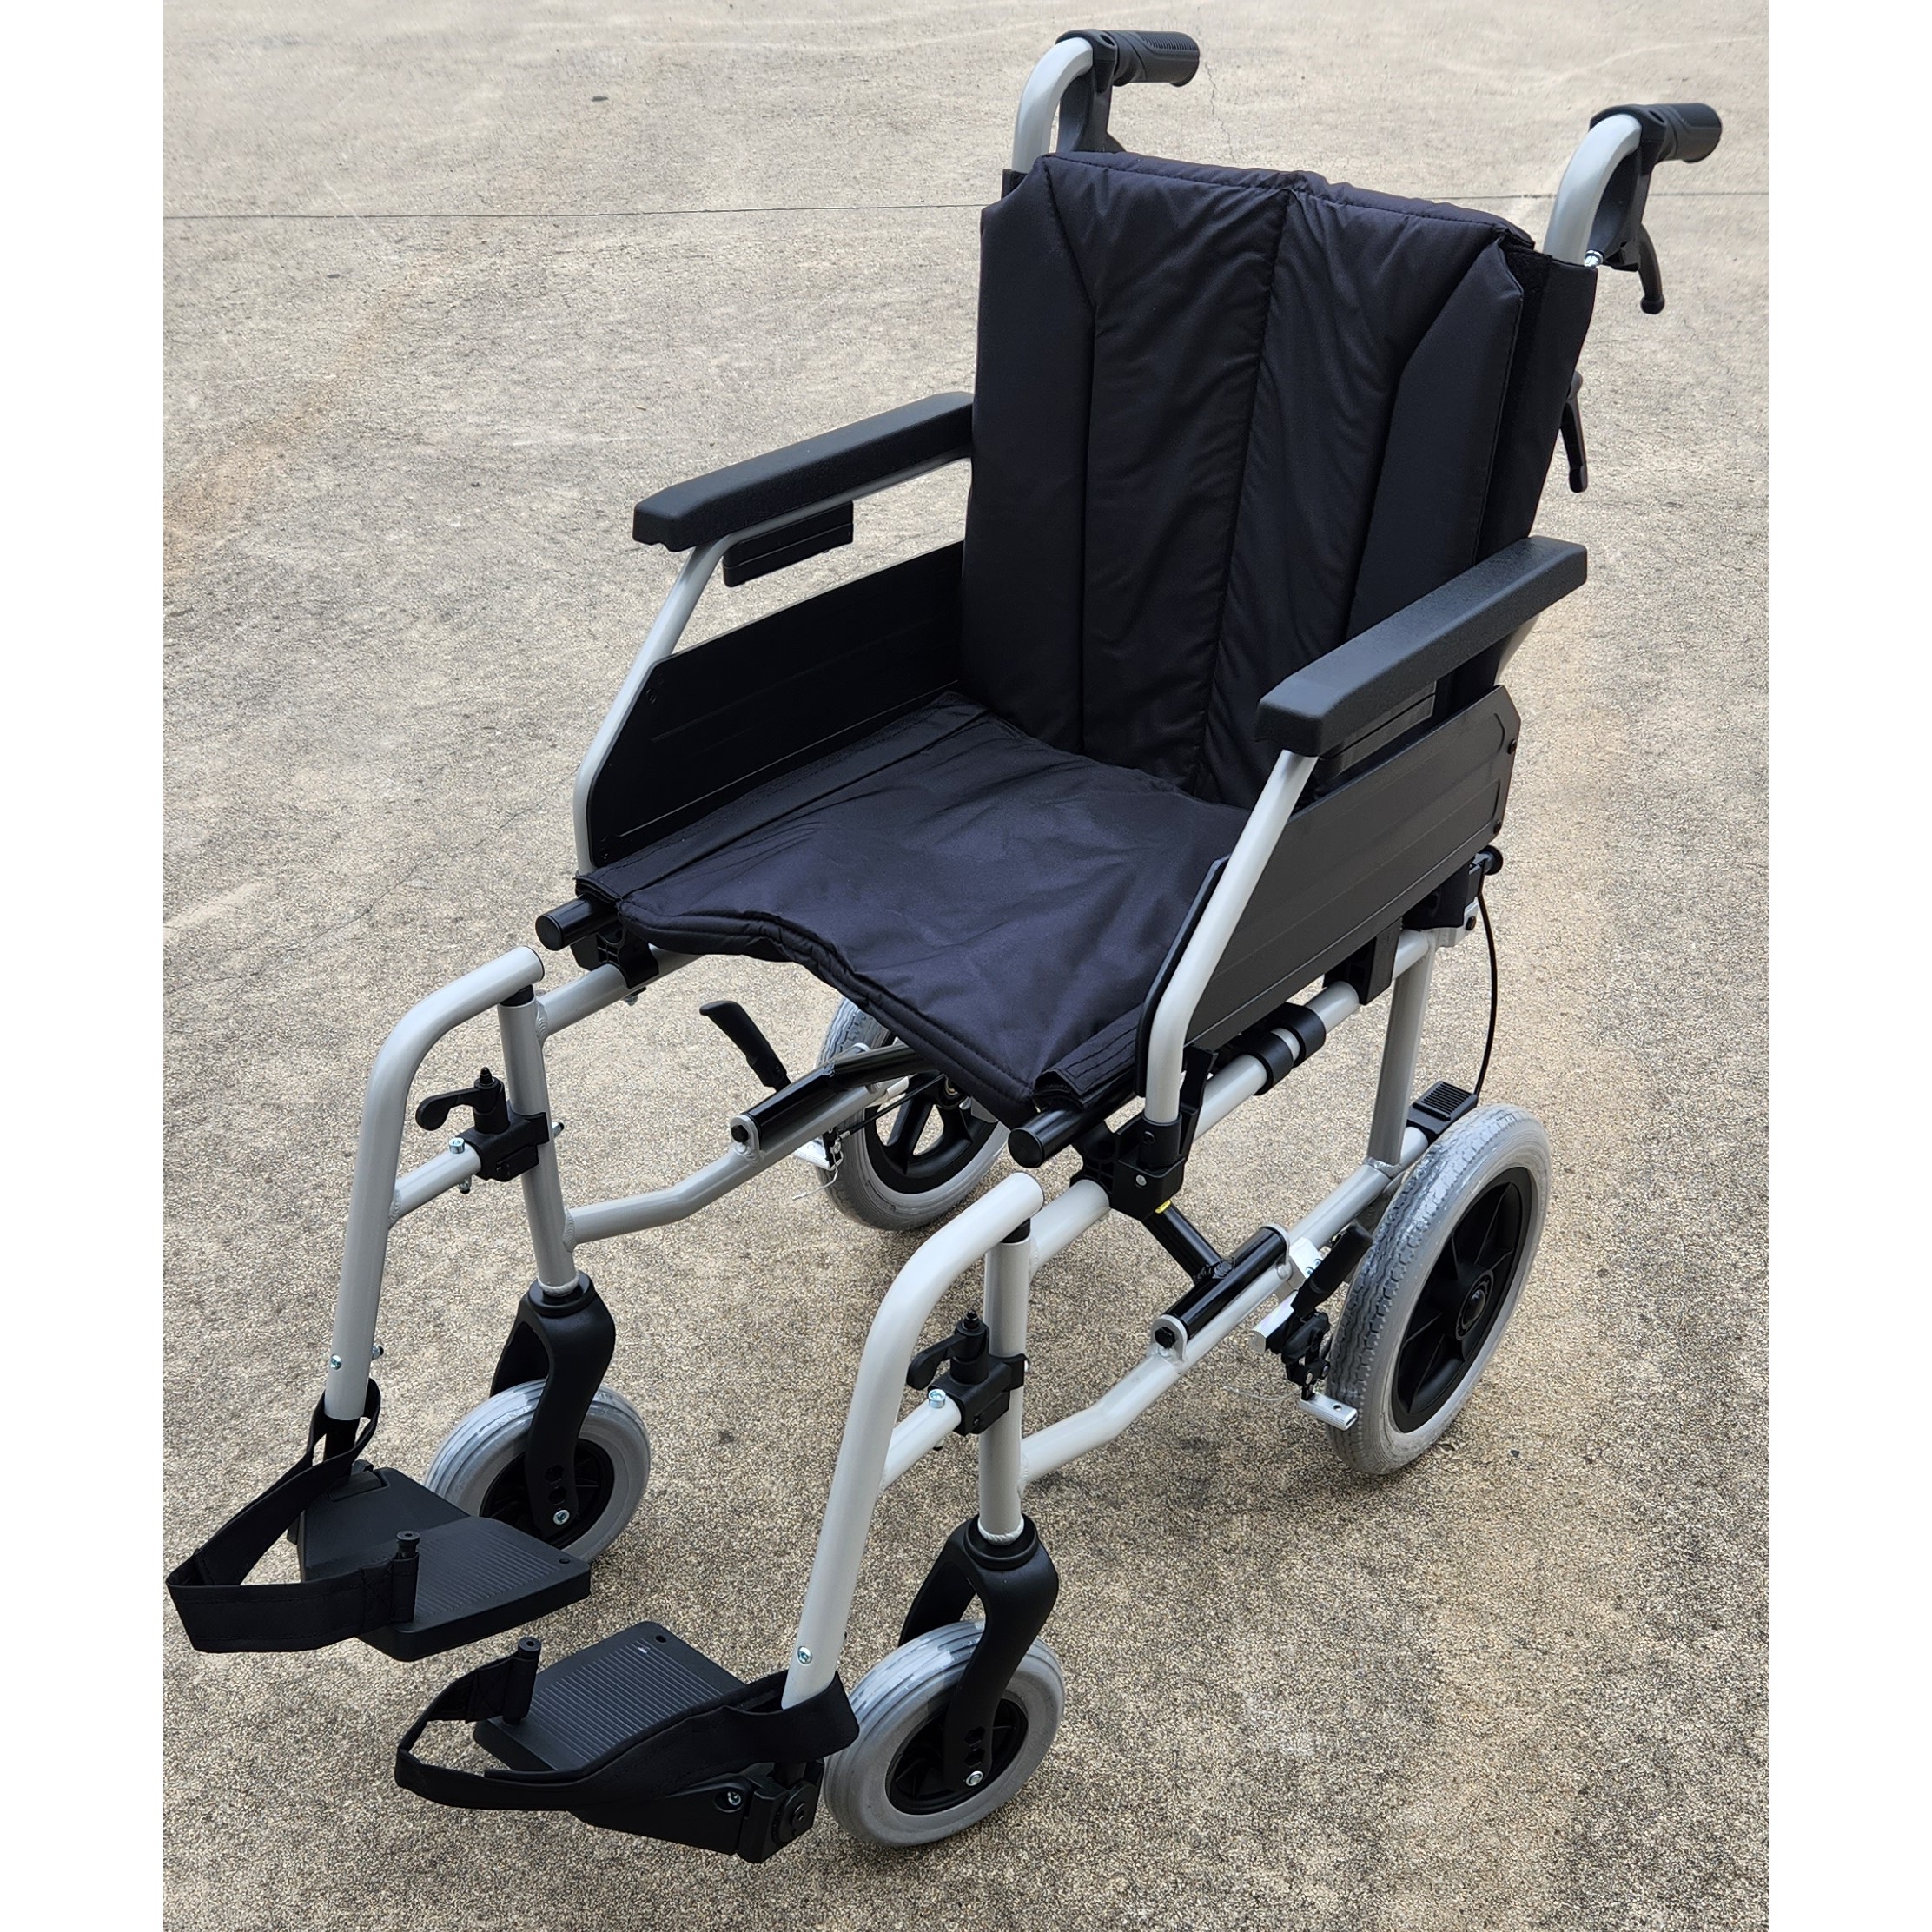 Rothcare Adjustor Transit Manual Wheelchair